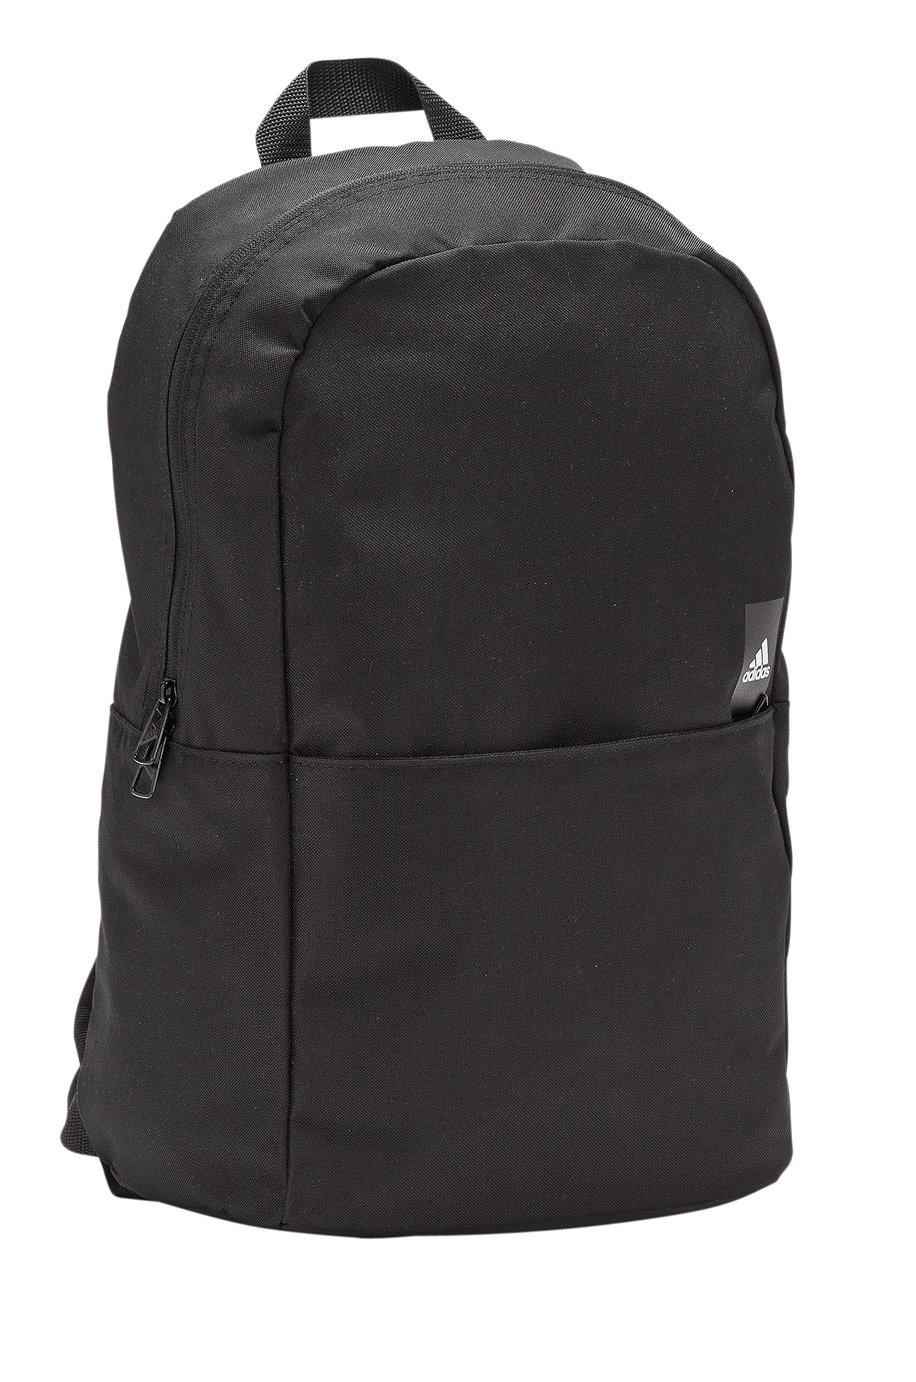 'Adidas Classic Medium Backpack - Black